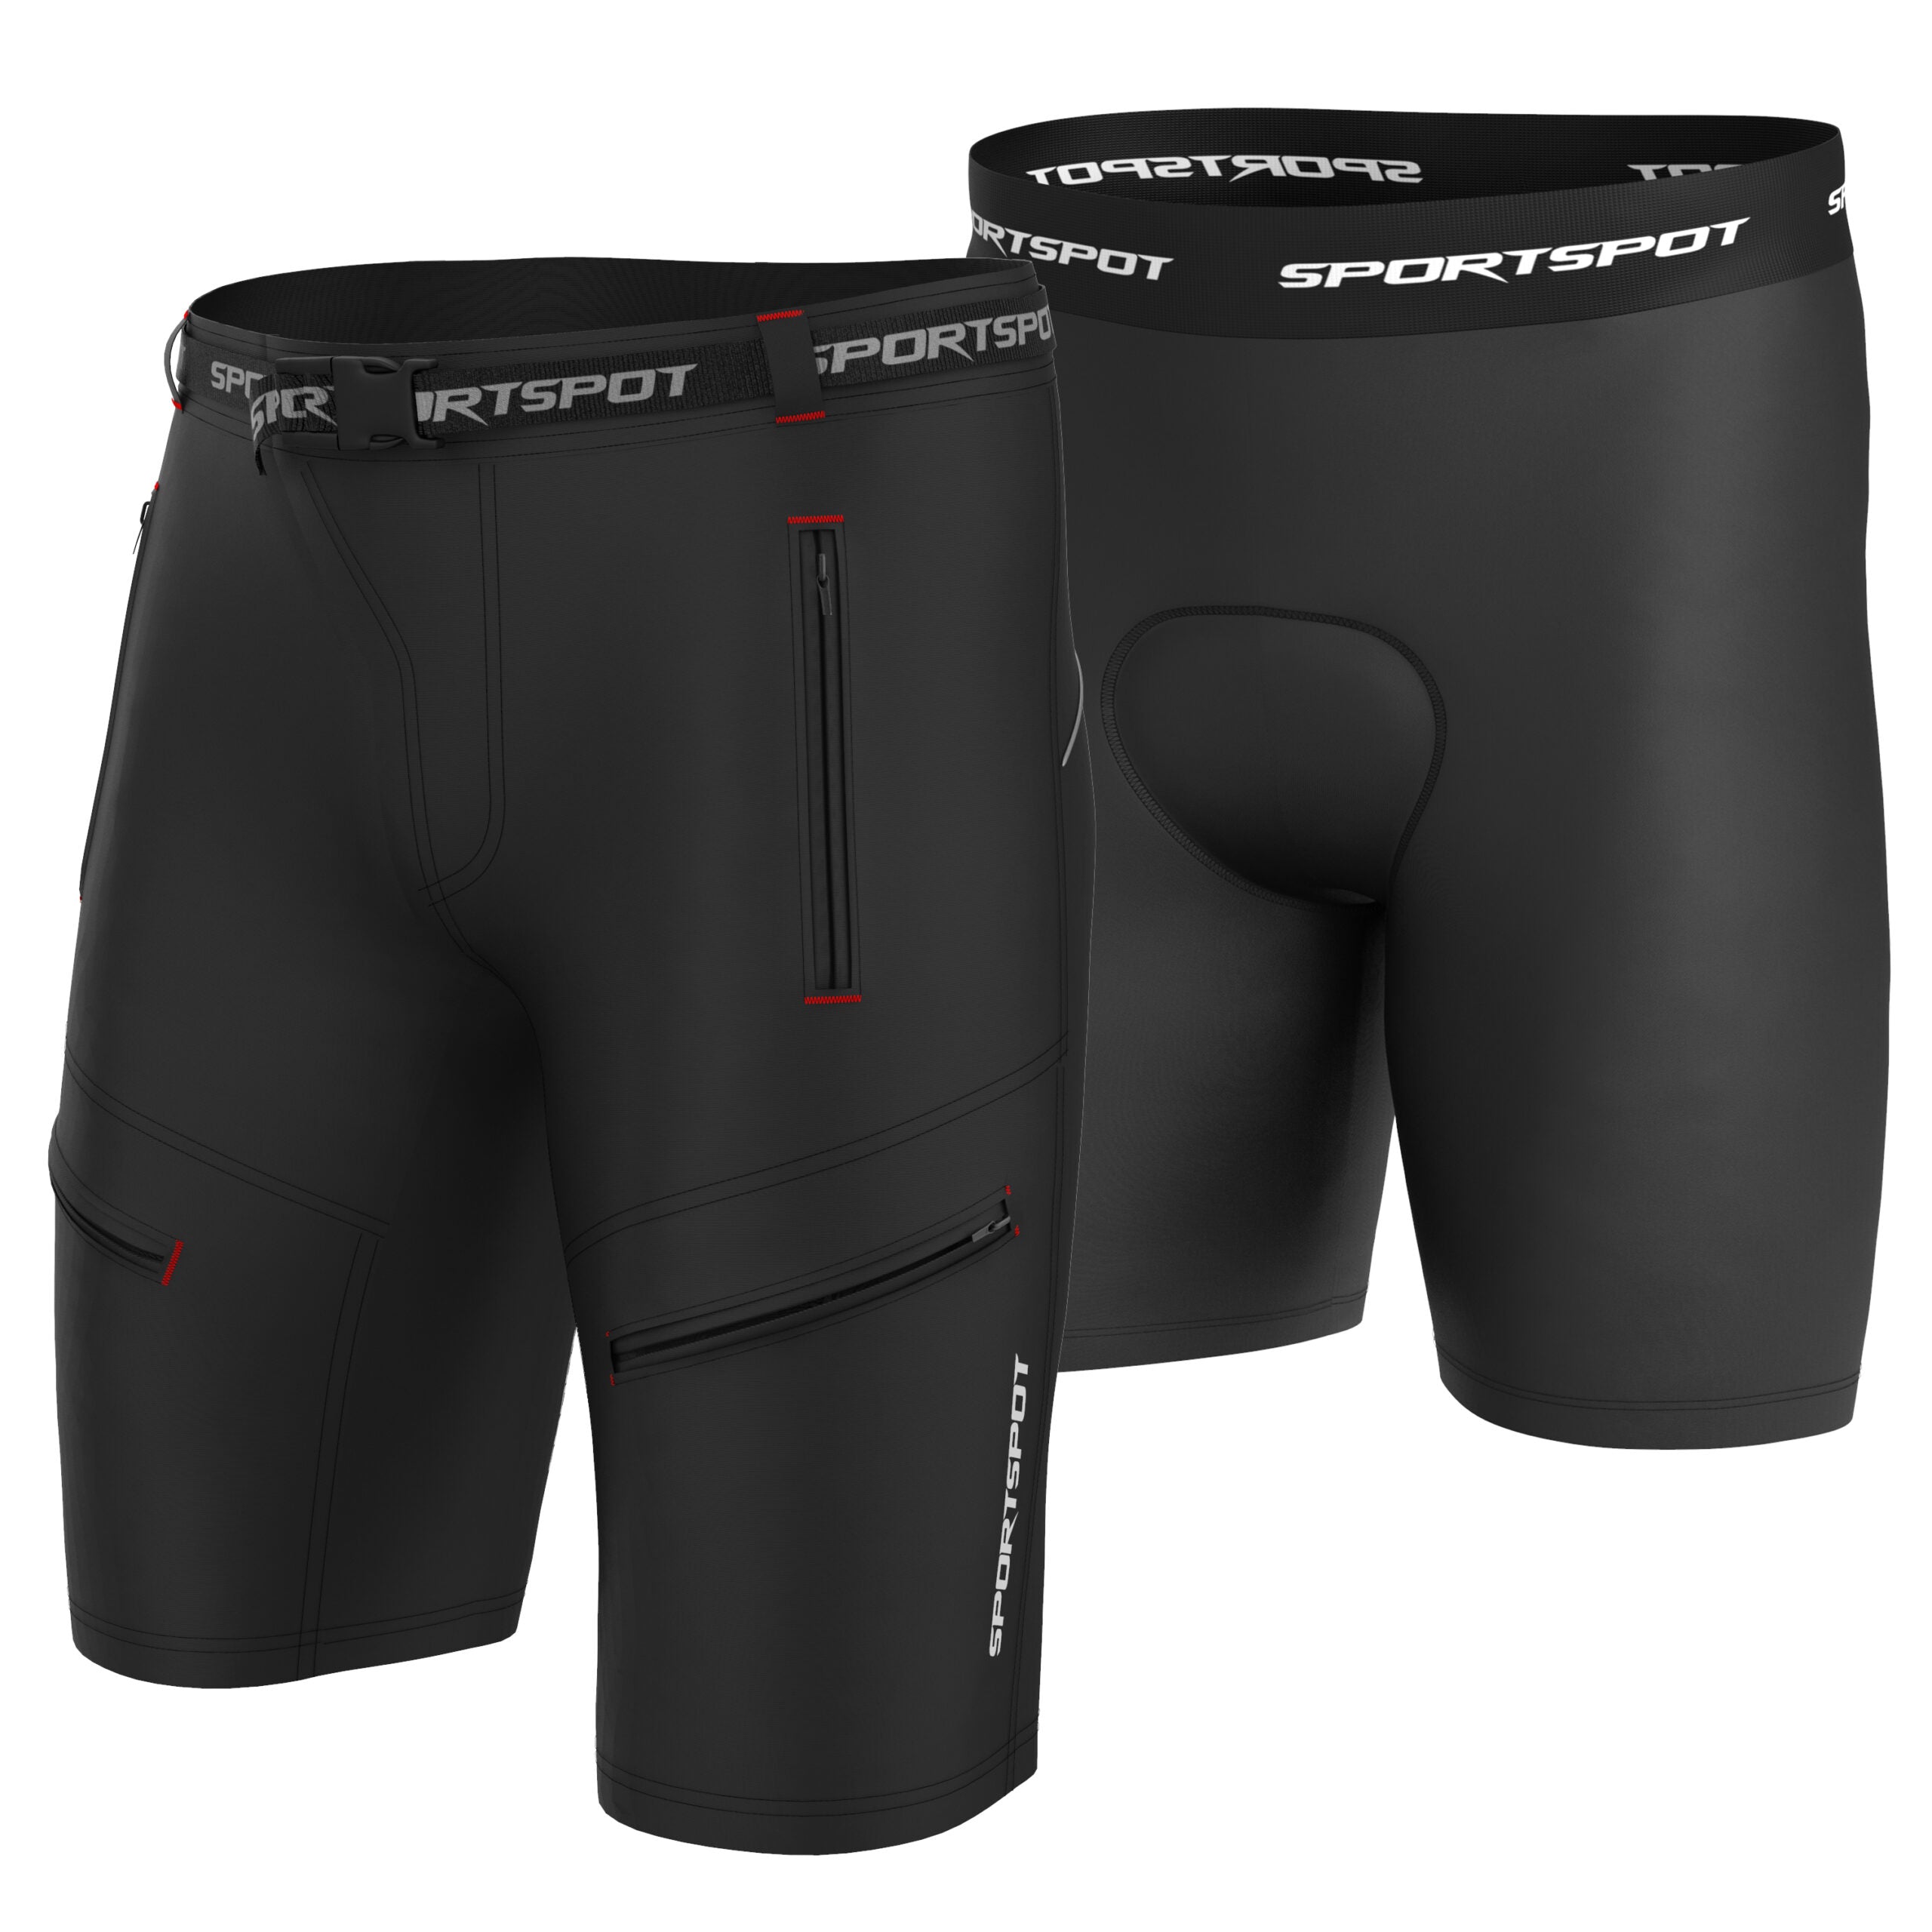 mtb mountain biking shorts with underpants